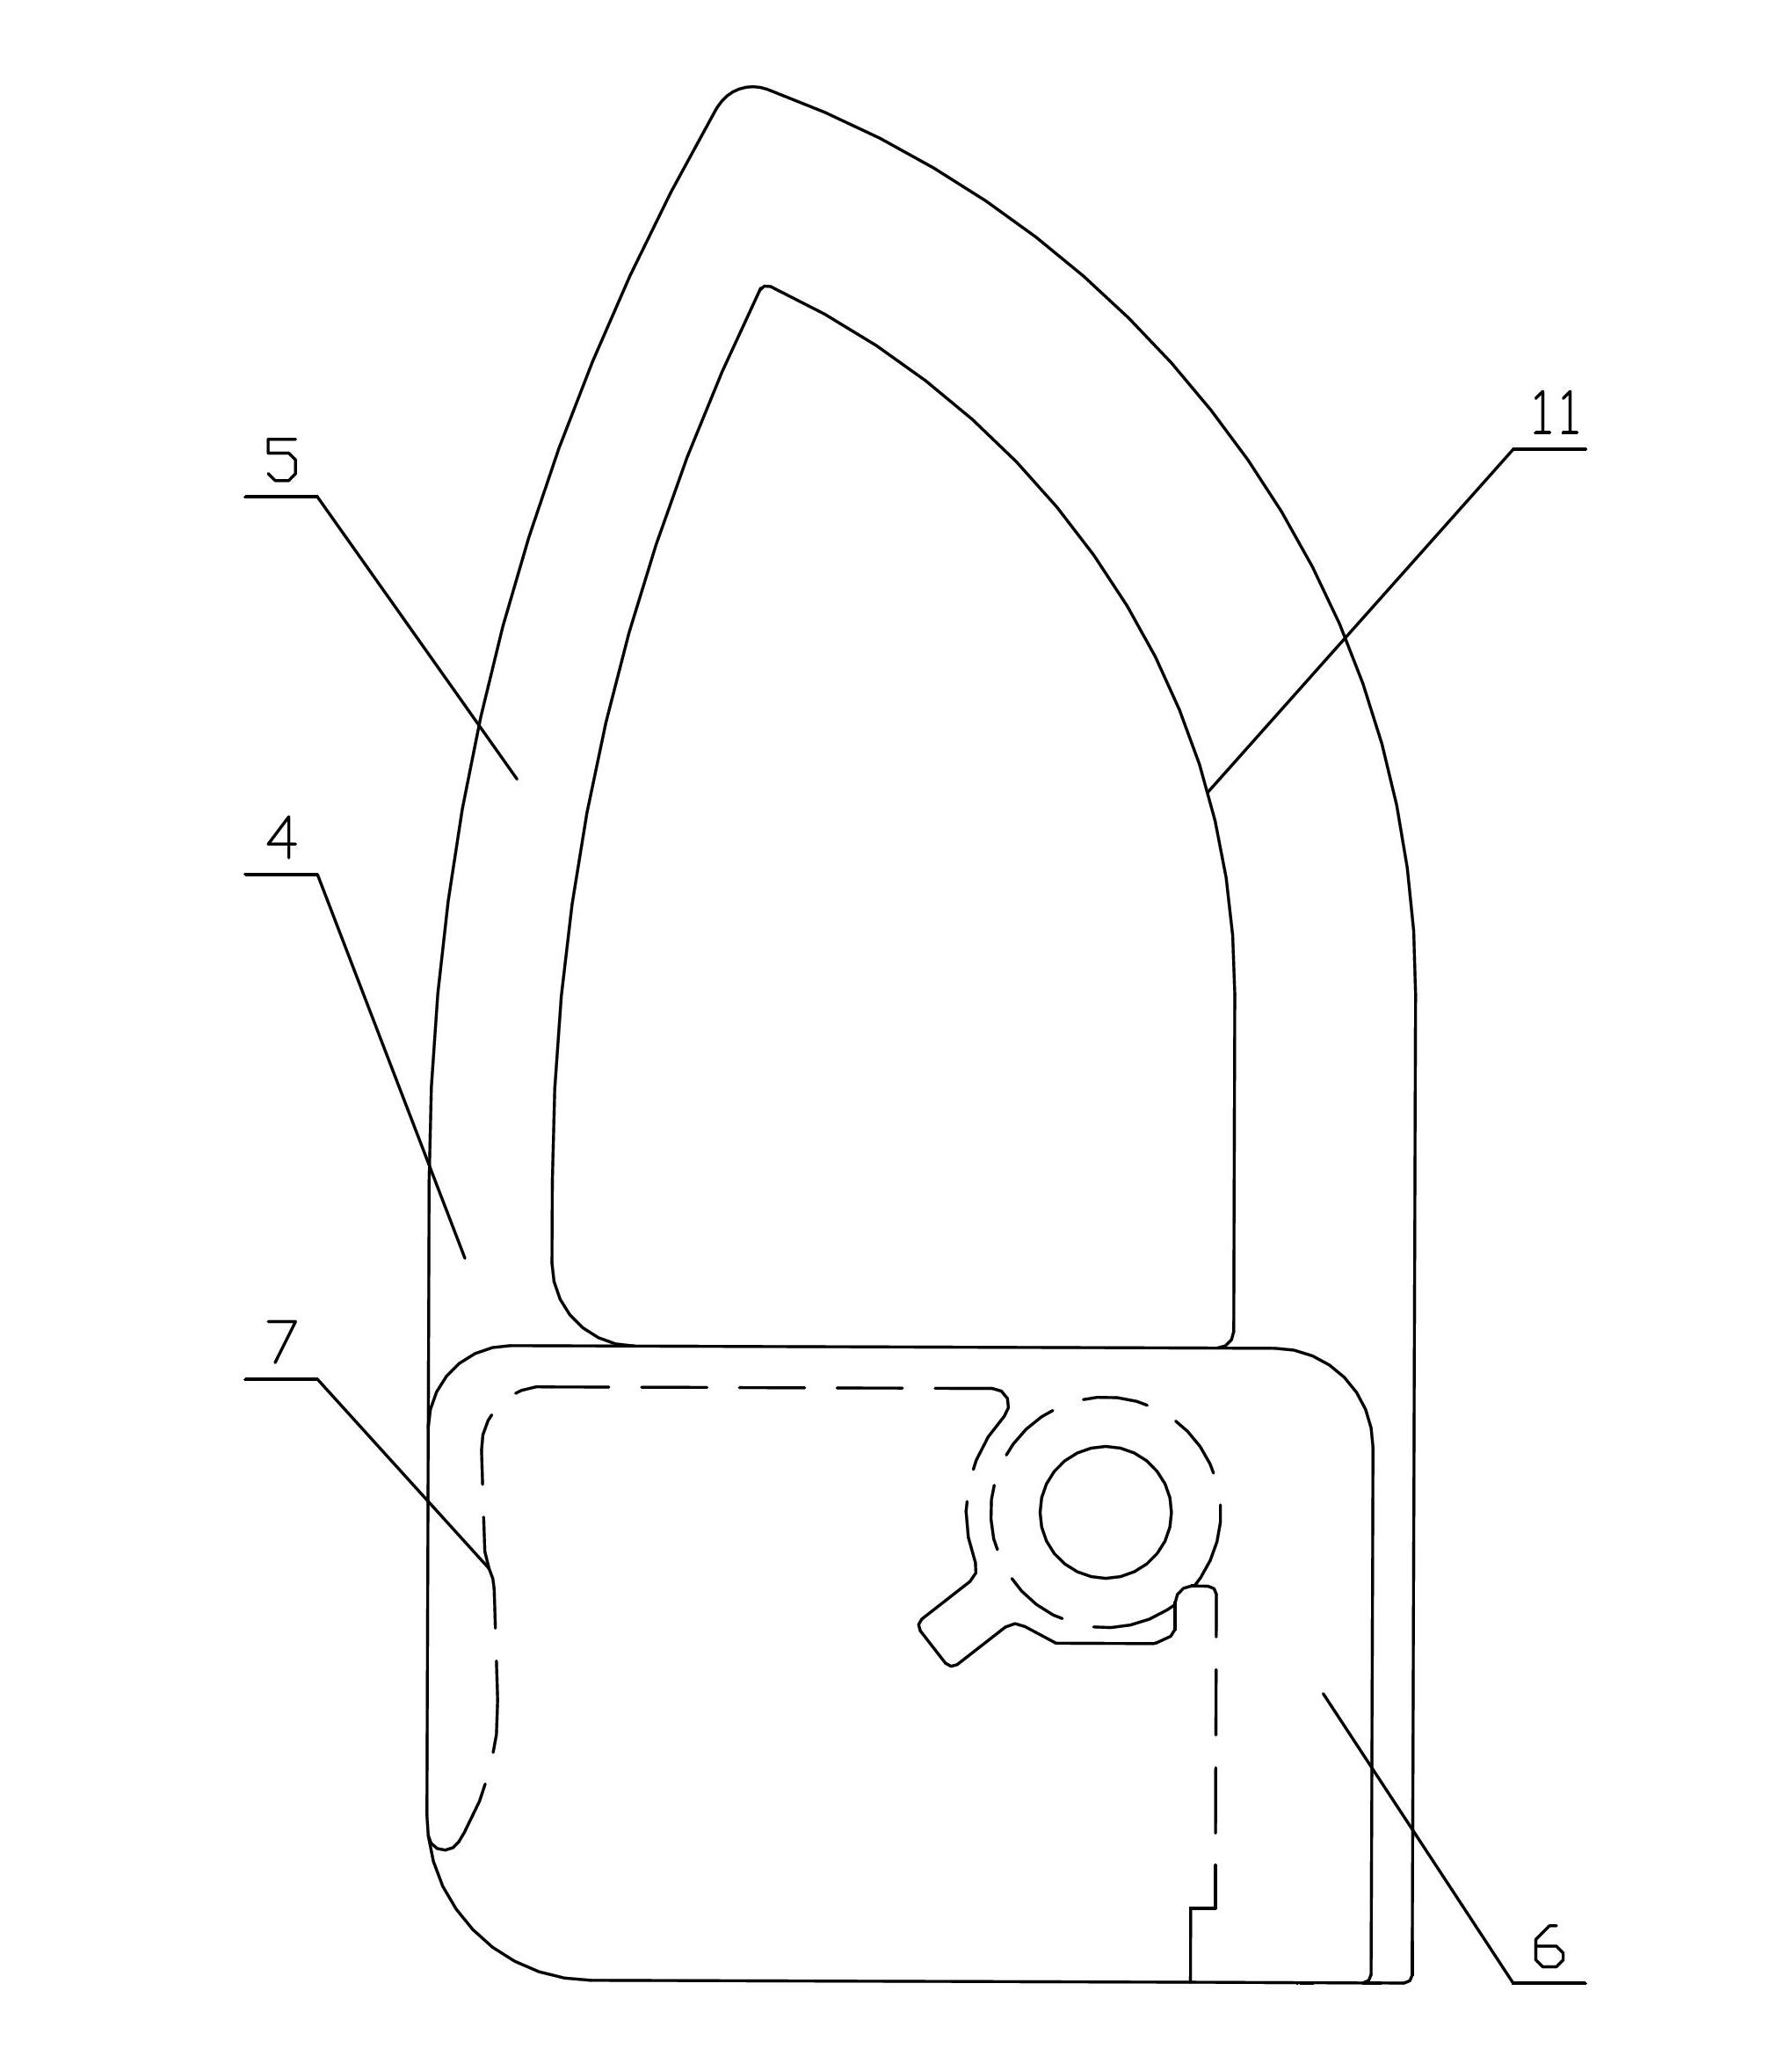 Refrigerator door body locking device with handle function